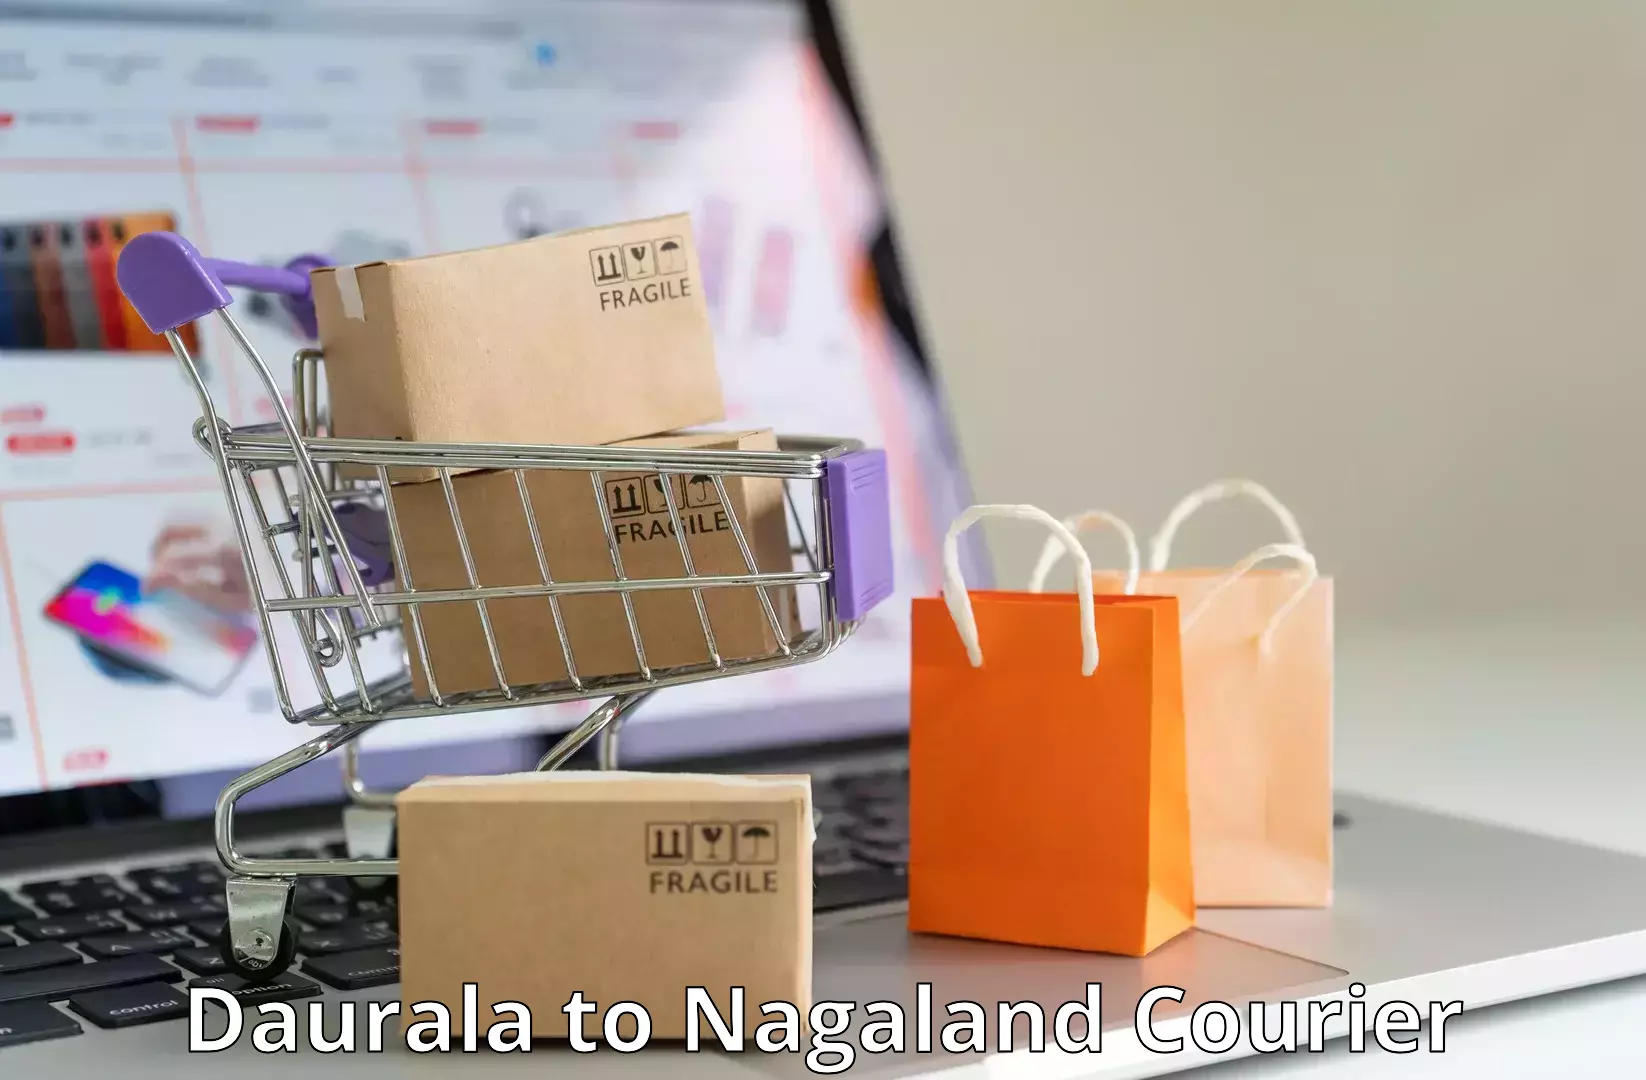 Courier service innovation Daurala to Dimapur